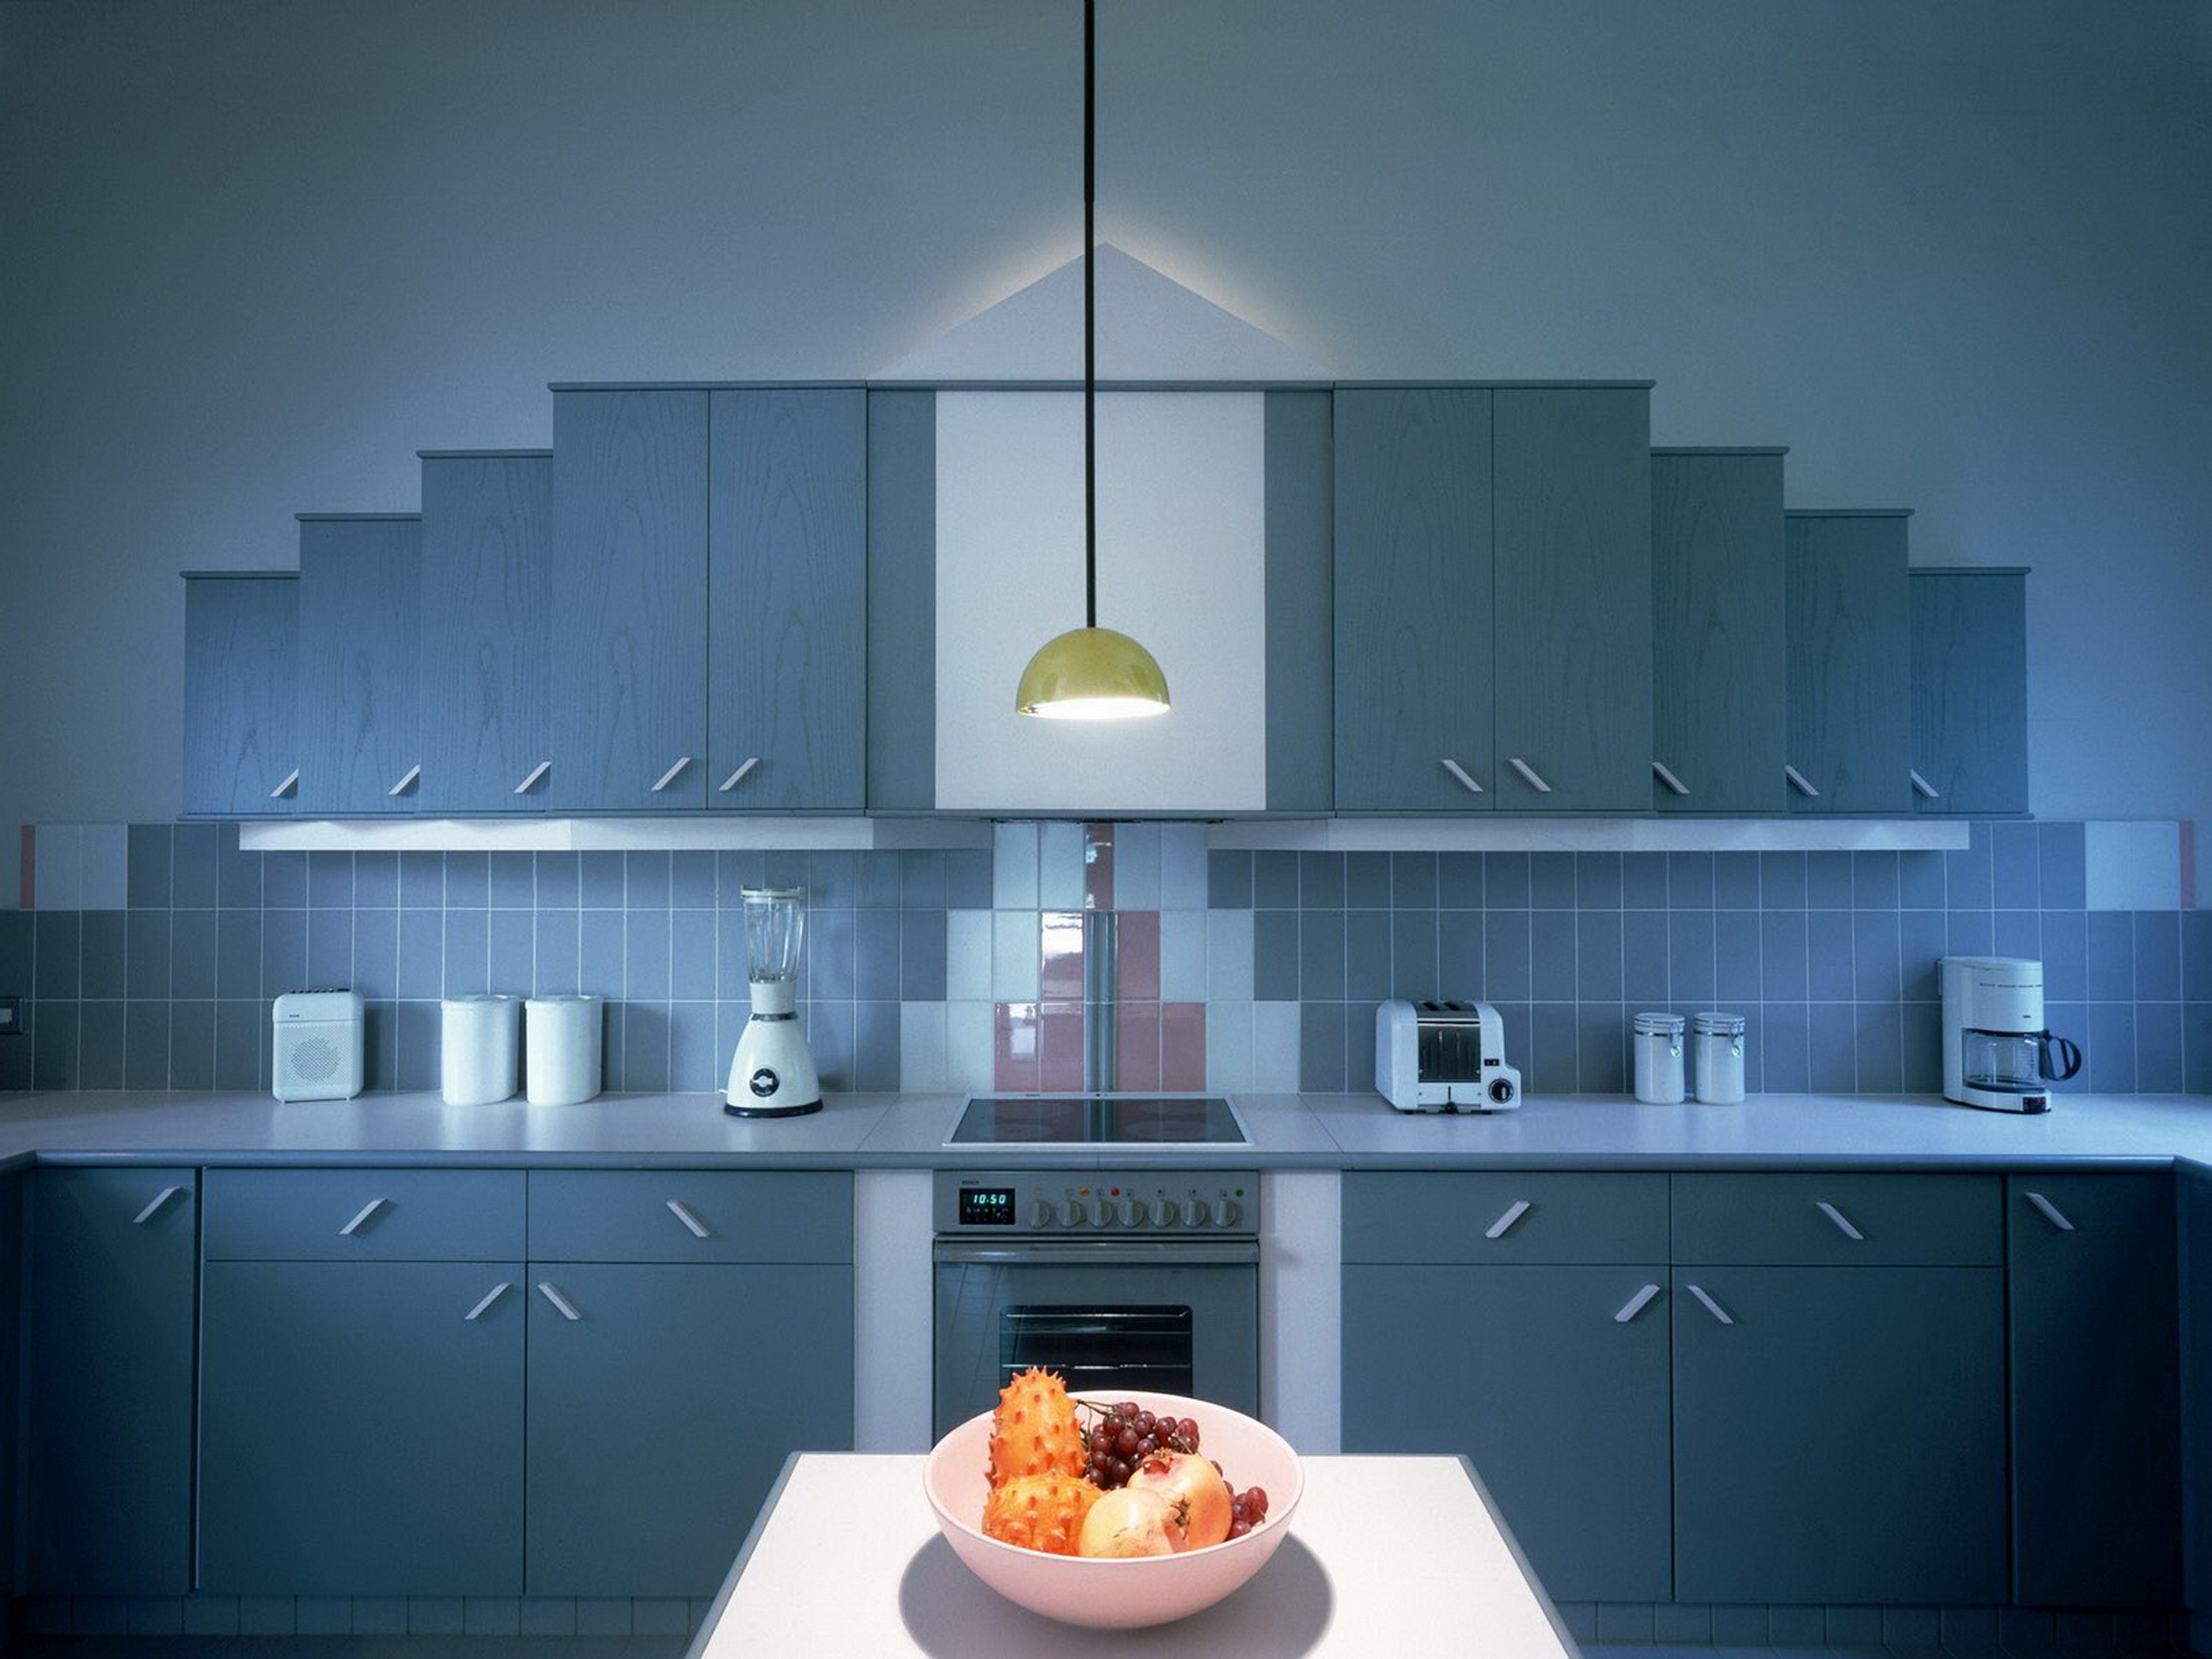 Фон кухня для фотошопа. Кухонный интерьер. Кухня дизайн интерьер. Кухня в синем цвете. Кухня фон.